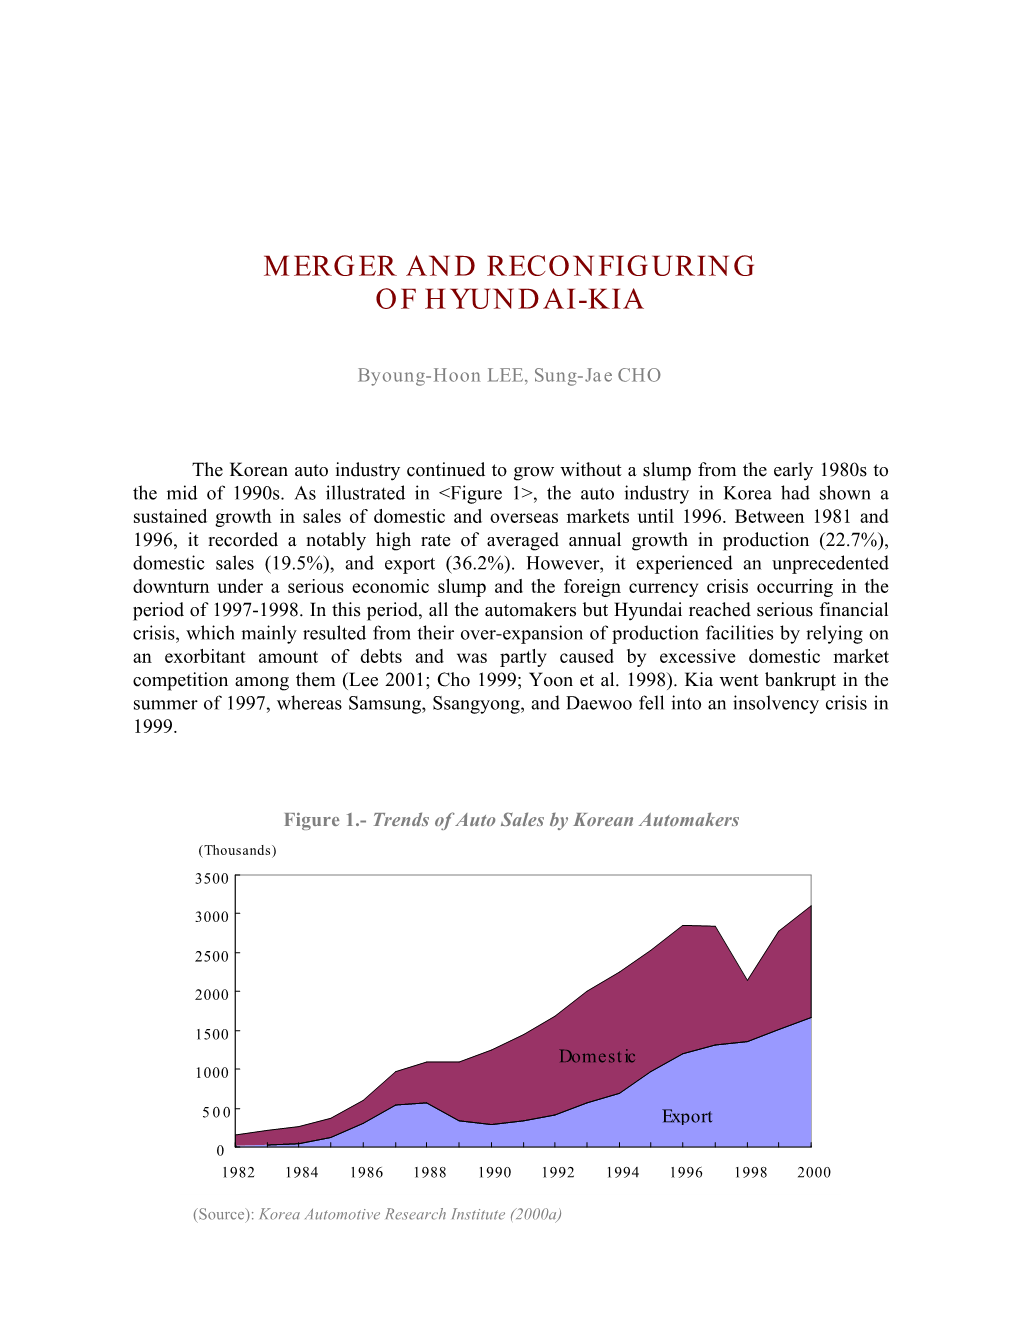 Merger and Reconfiguring of Hyundai-Kia